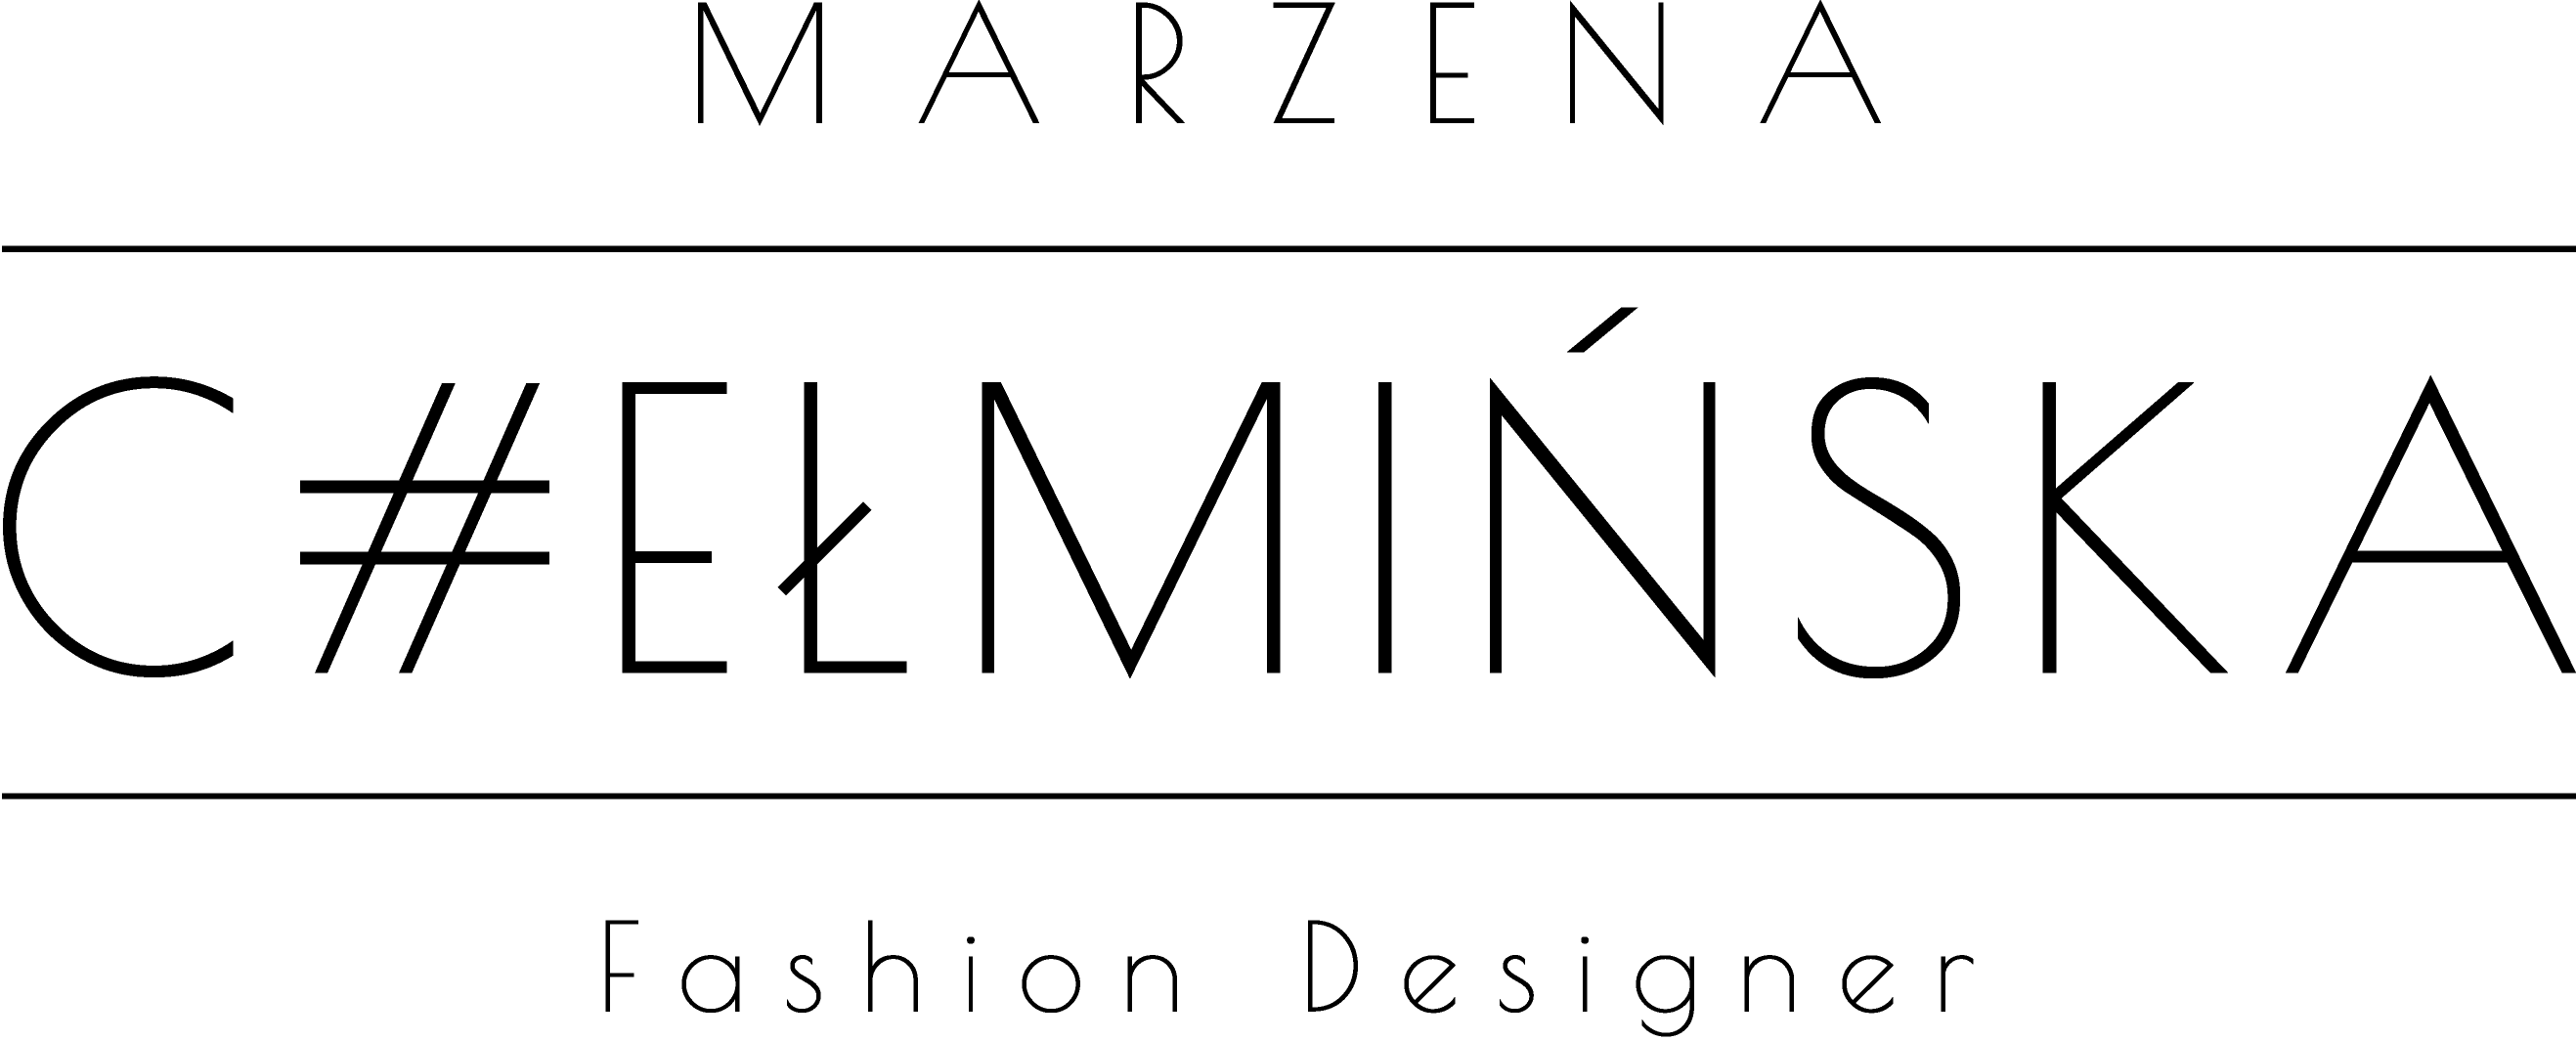 Logo C#elminska Chełmińska